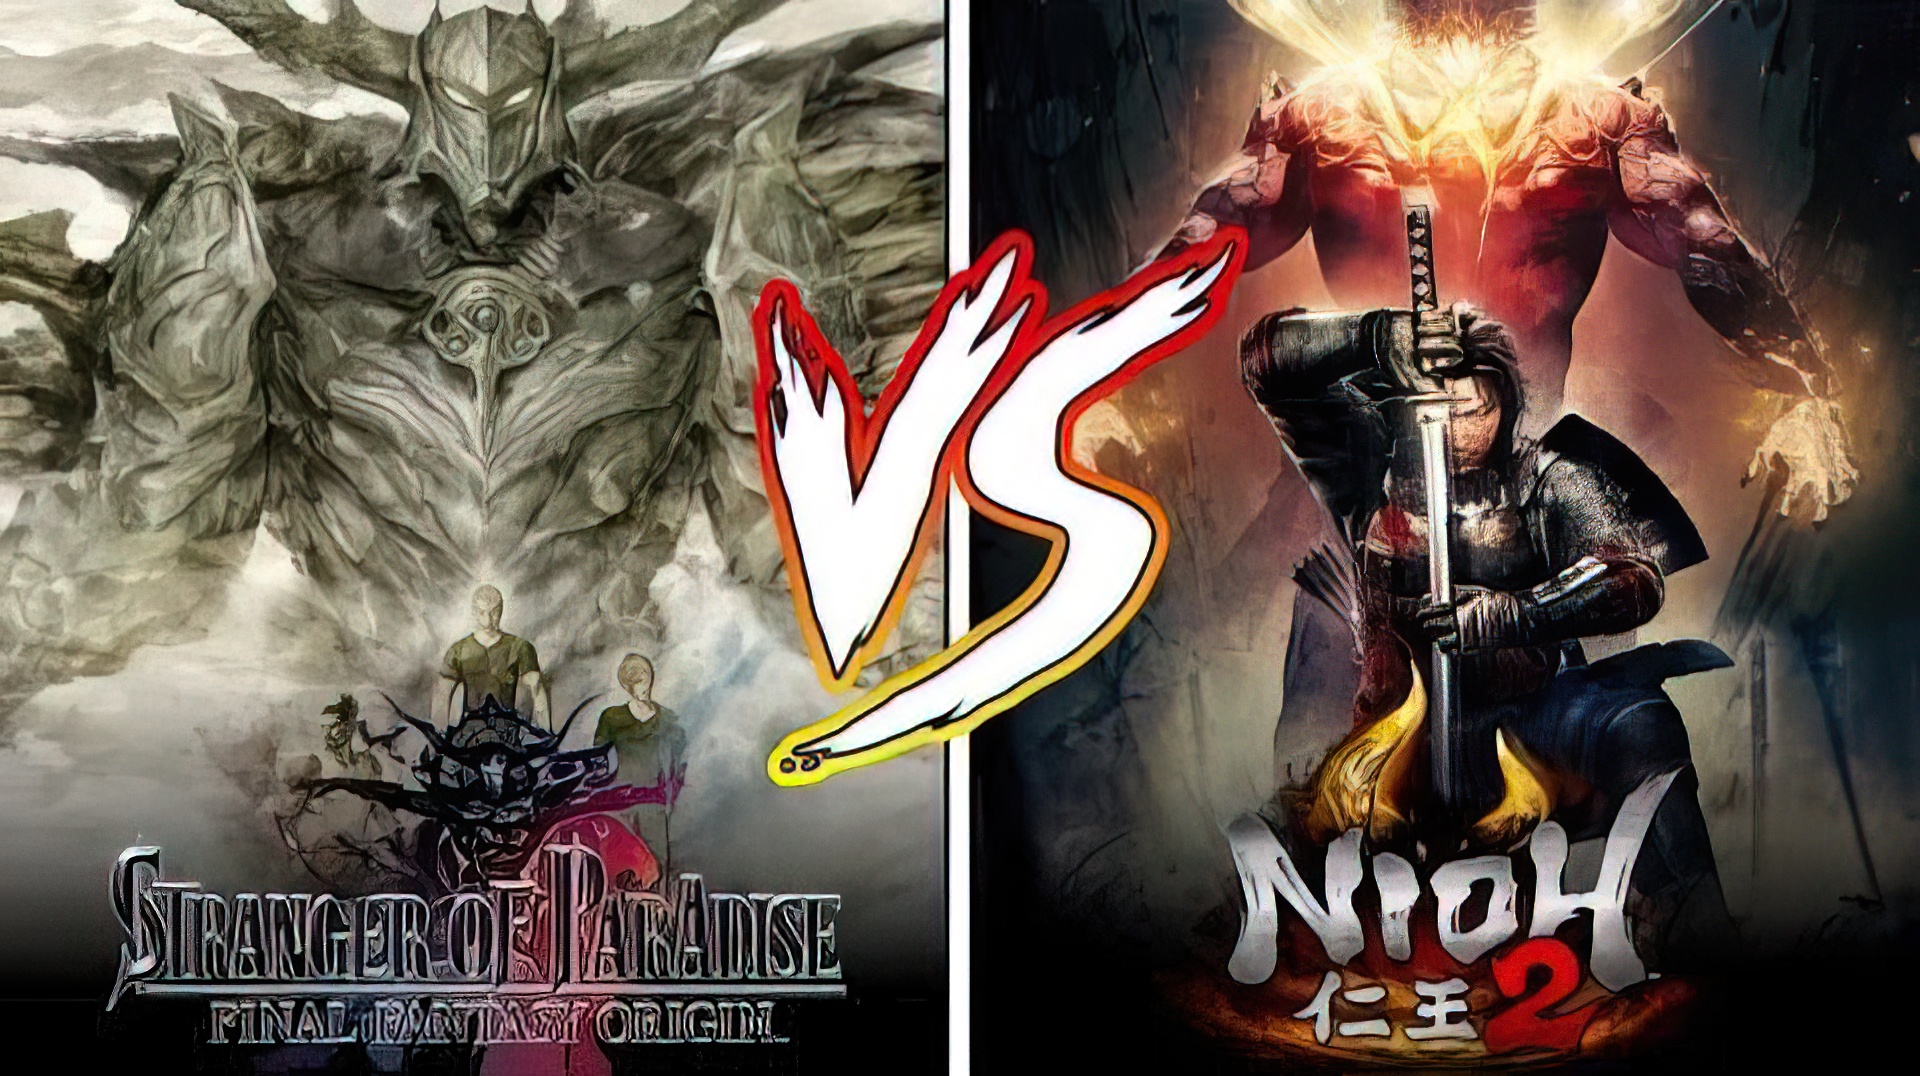 Nioh 2 vs Stranger of Paradise - Final Fantasy Origin